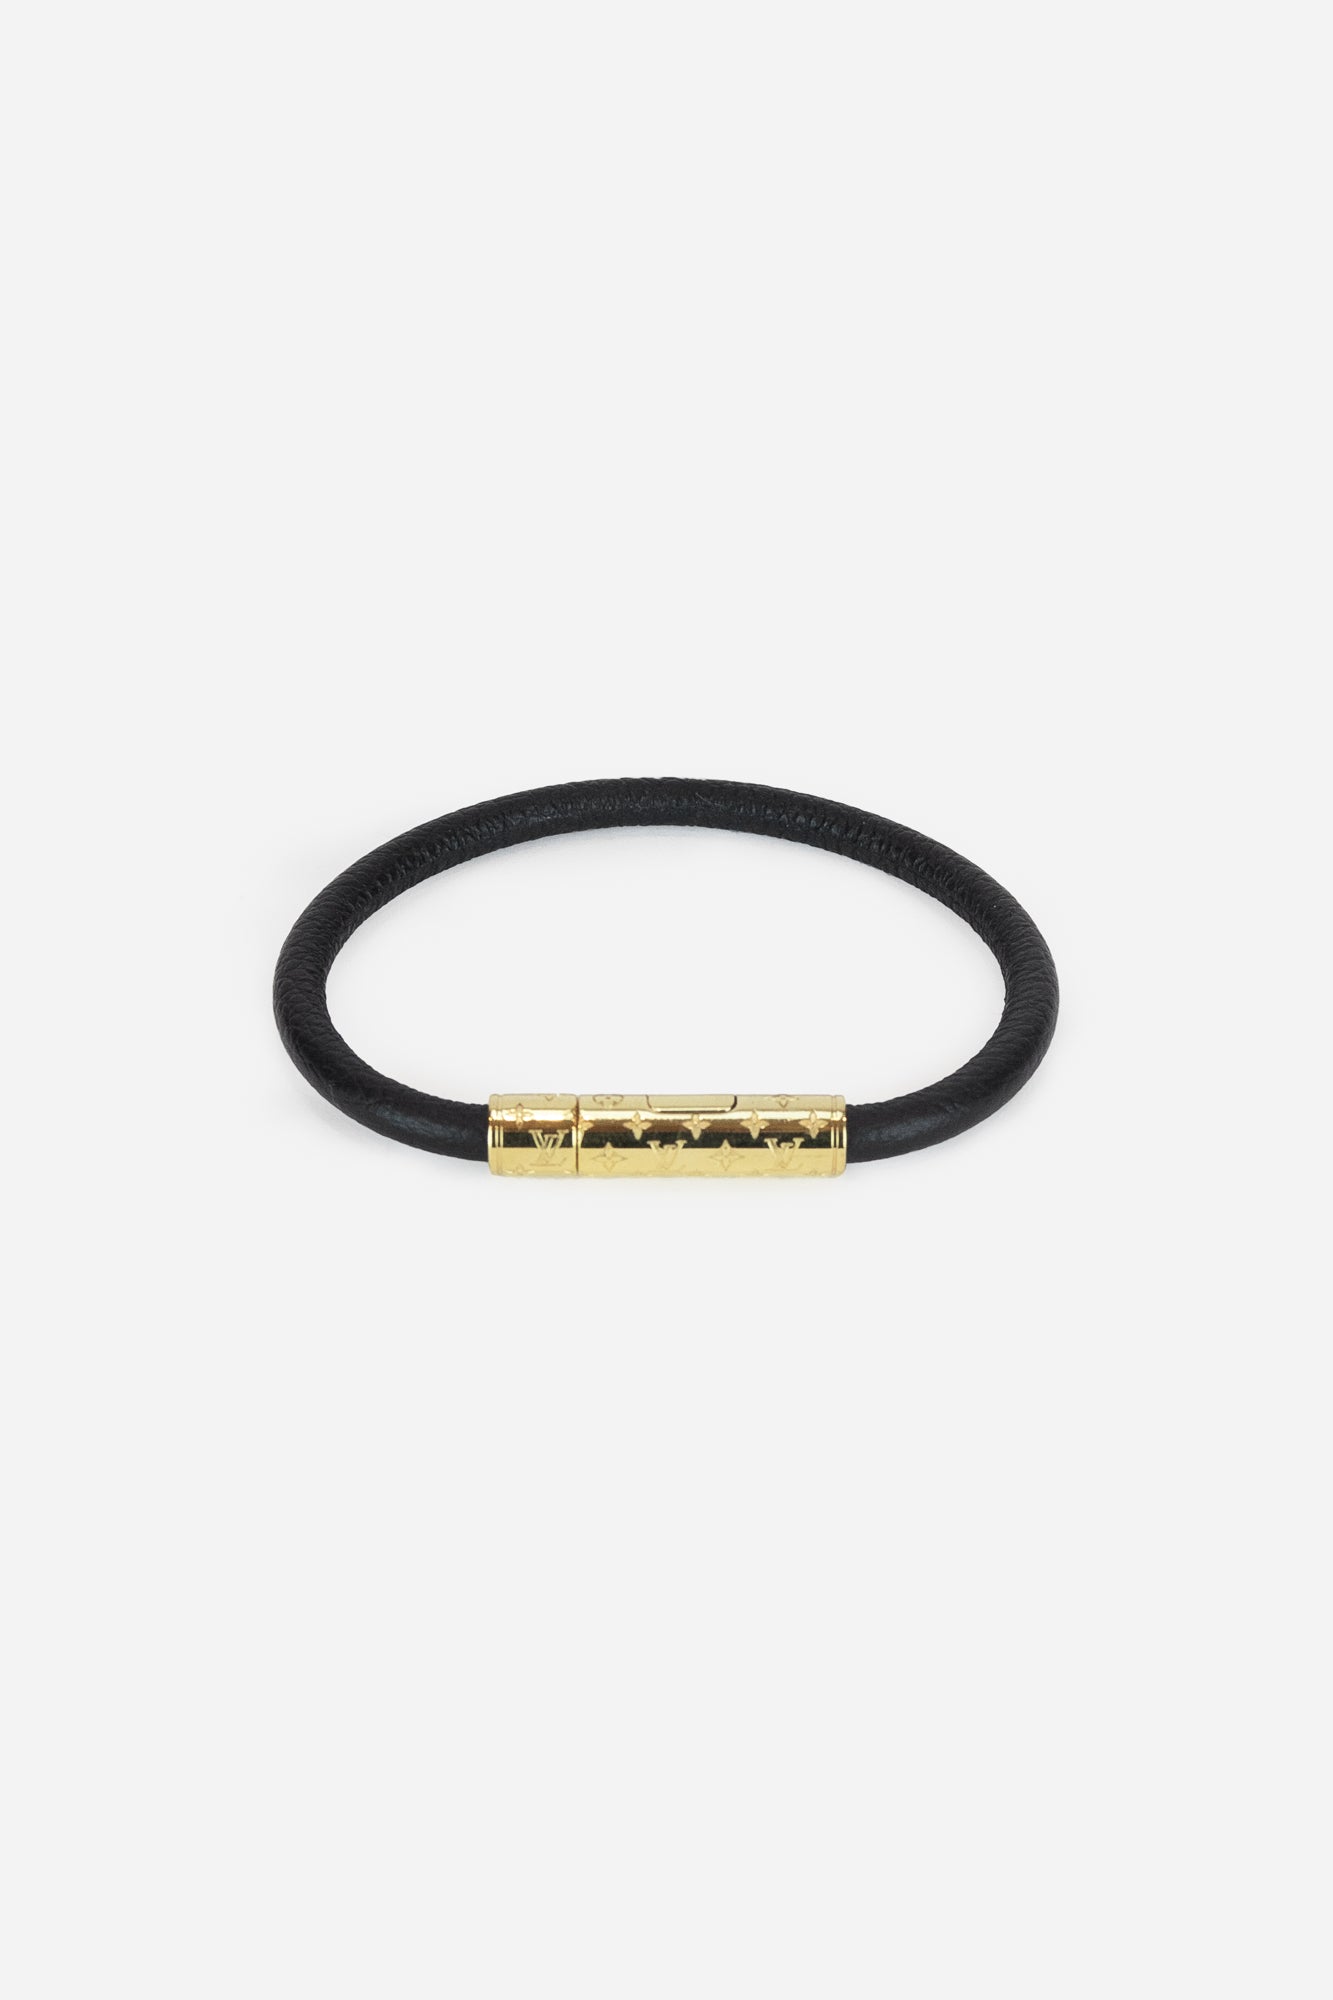 Black Leather & Gold Confidential Bracelet